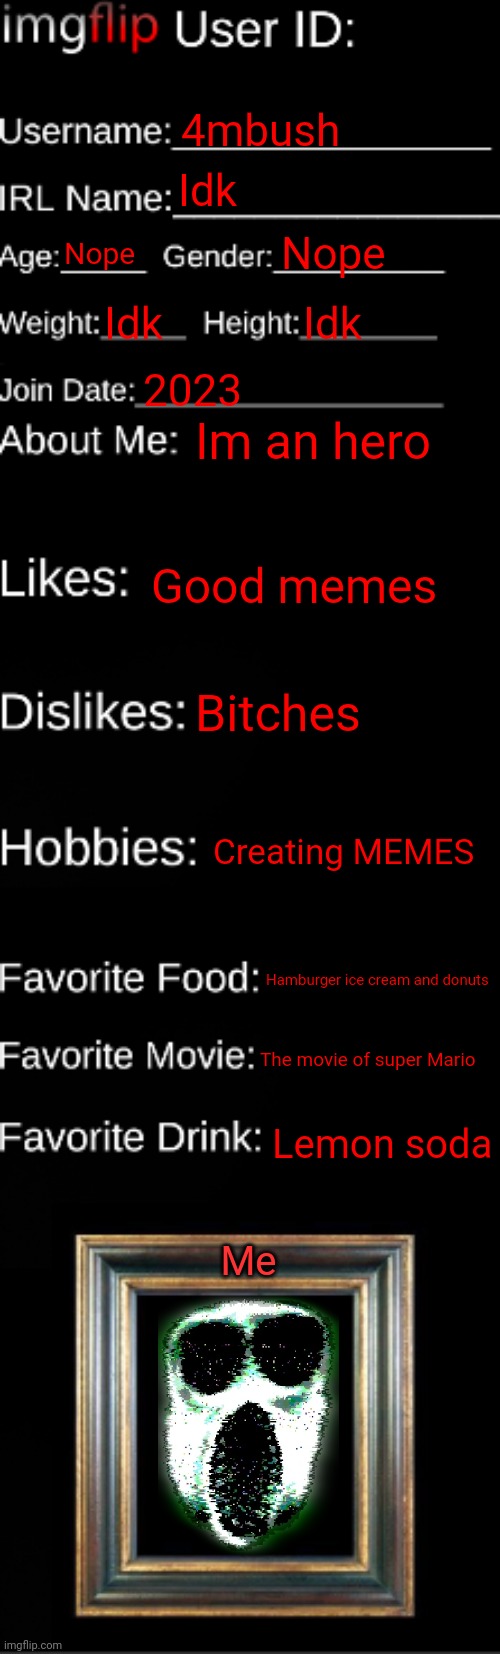 imgflip ID Card | 4mbush; Idk; Nope; Nope; Idk; Idk; 2023; Im an hero; Good memes; Bitches; Creating MEMES; Hamburger ice cream and donuts; The movie of super Mario; Lemon soda; Me | image tagged in imgflip id card | made w/ Imgflip meme maker